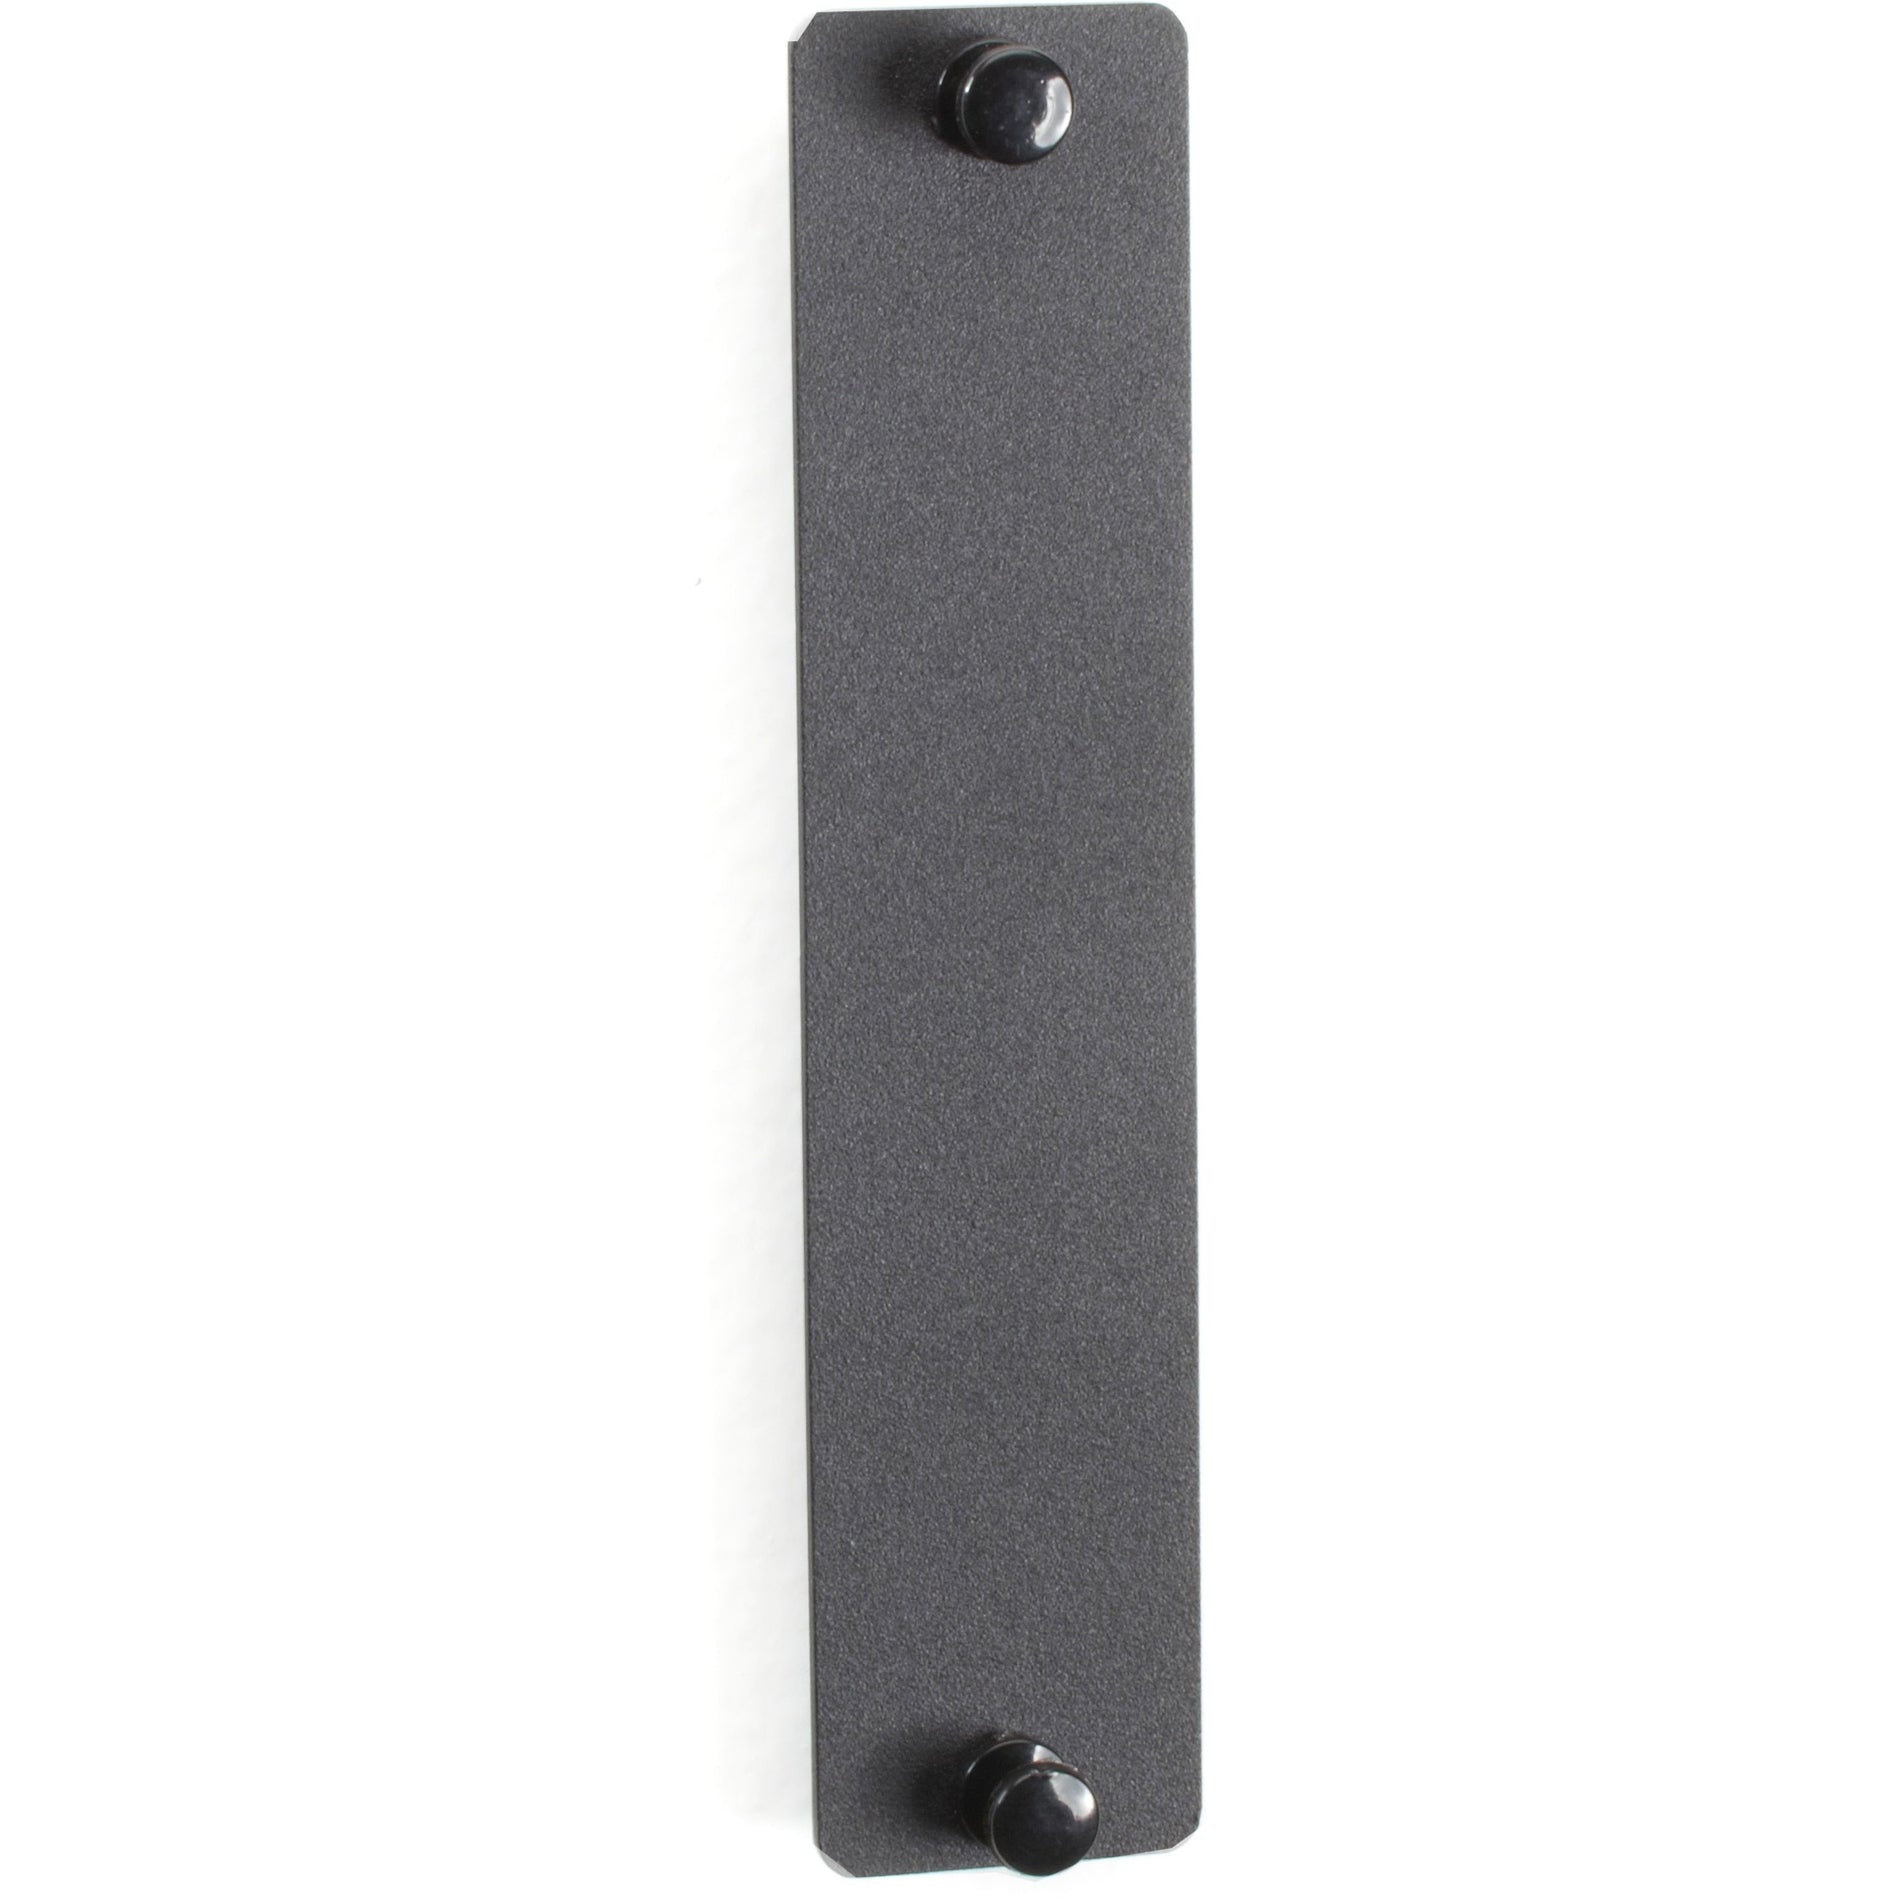 Black Box JPM480A Blank Insert for Fiber Adapter Enclosures/Panels, Easy Snap-in Design